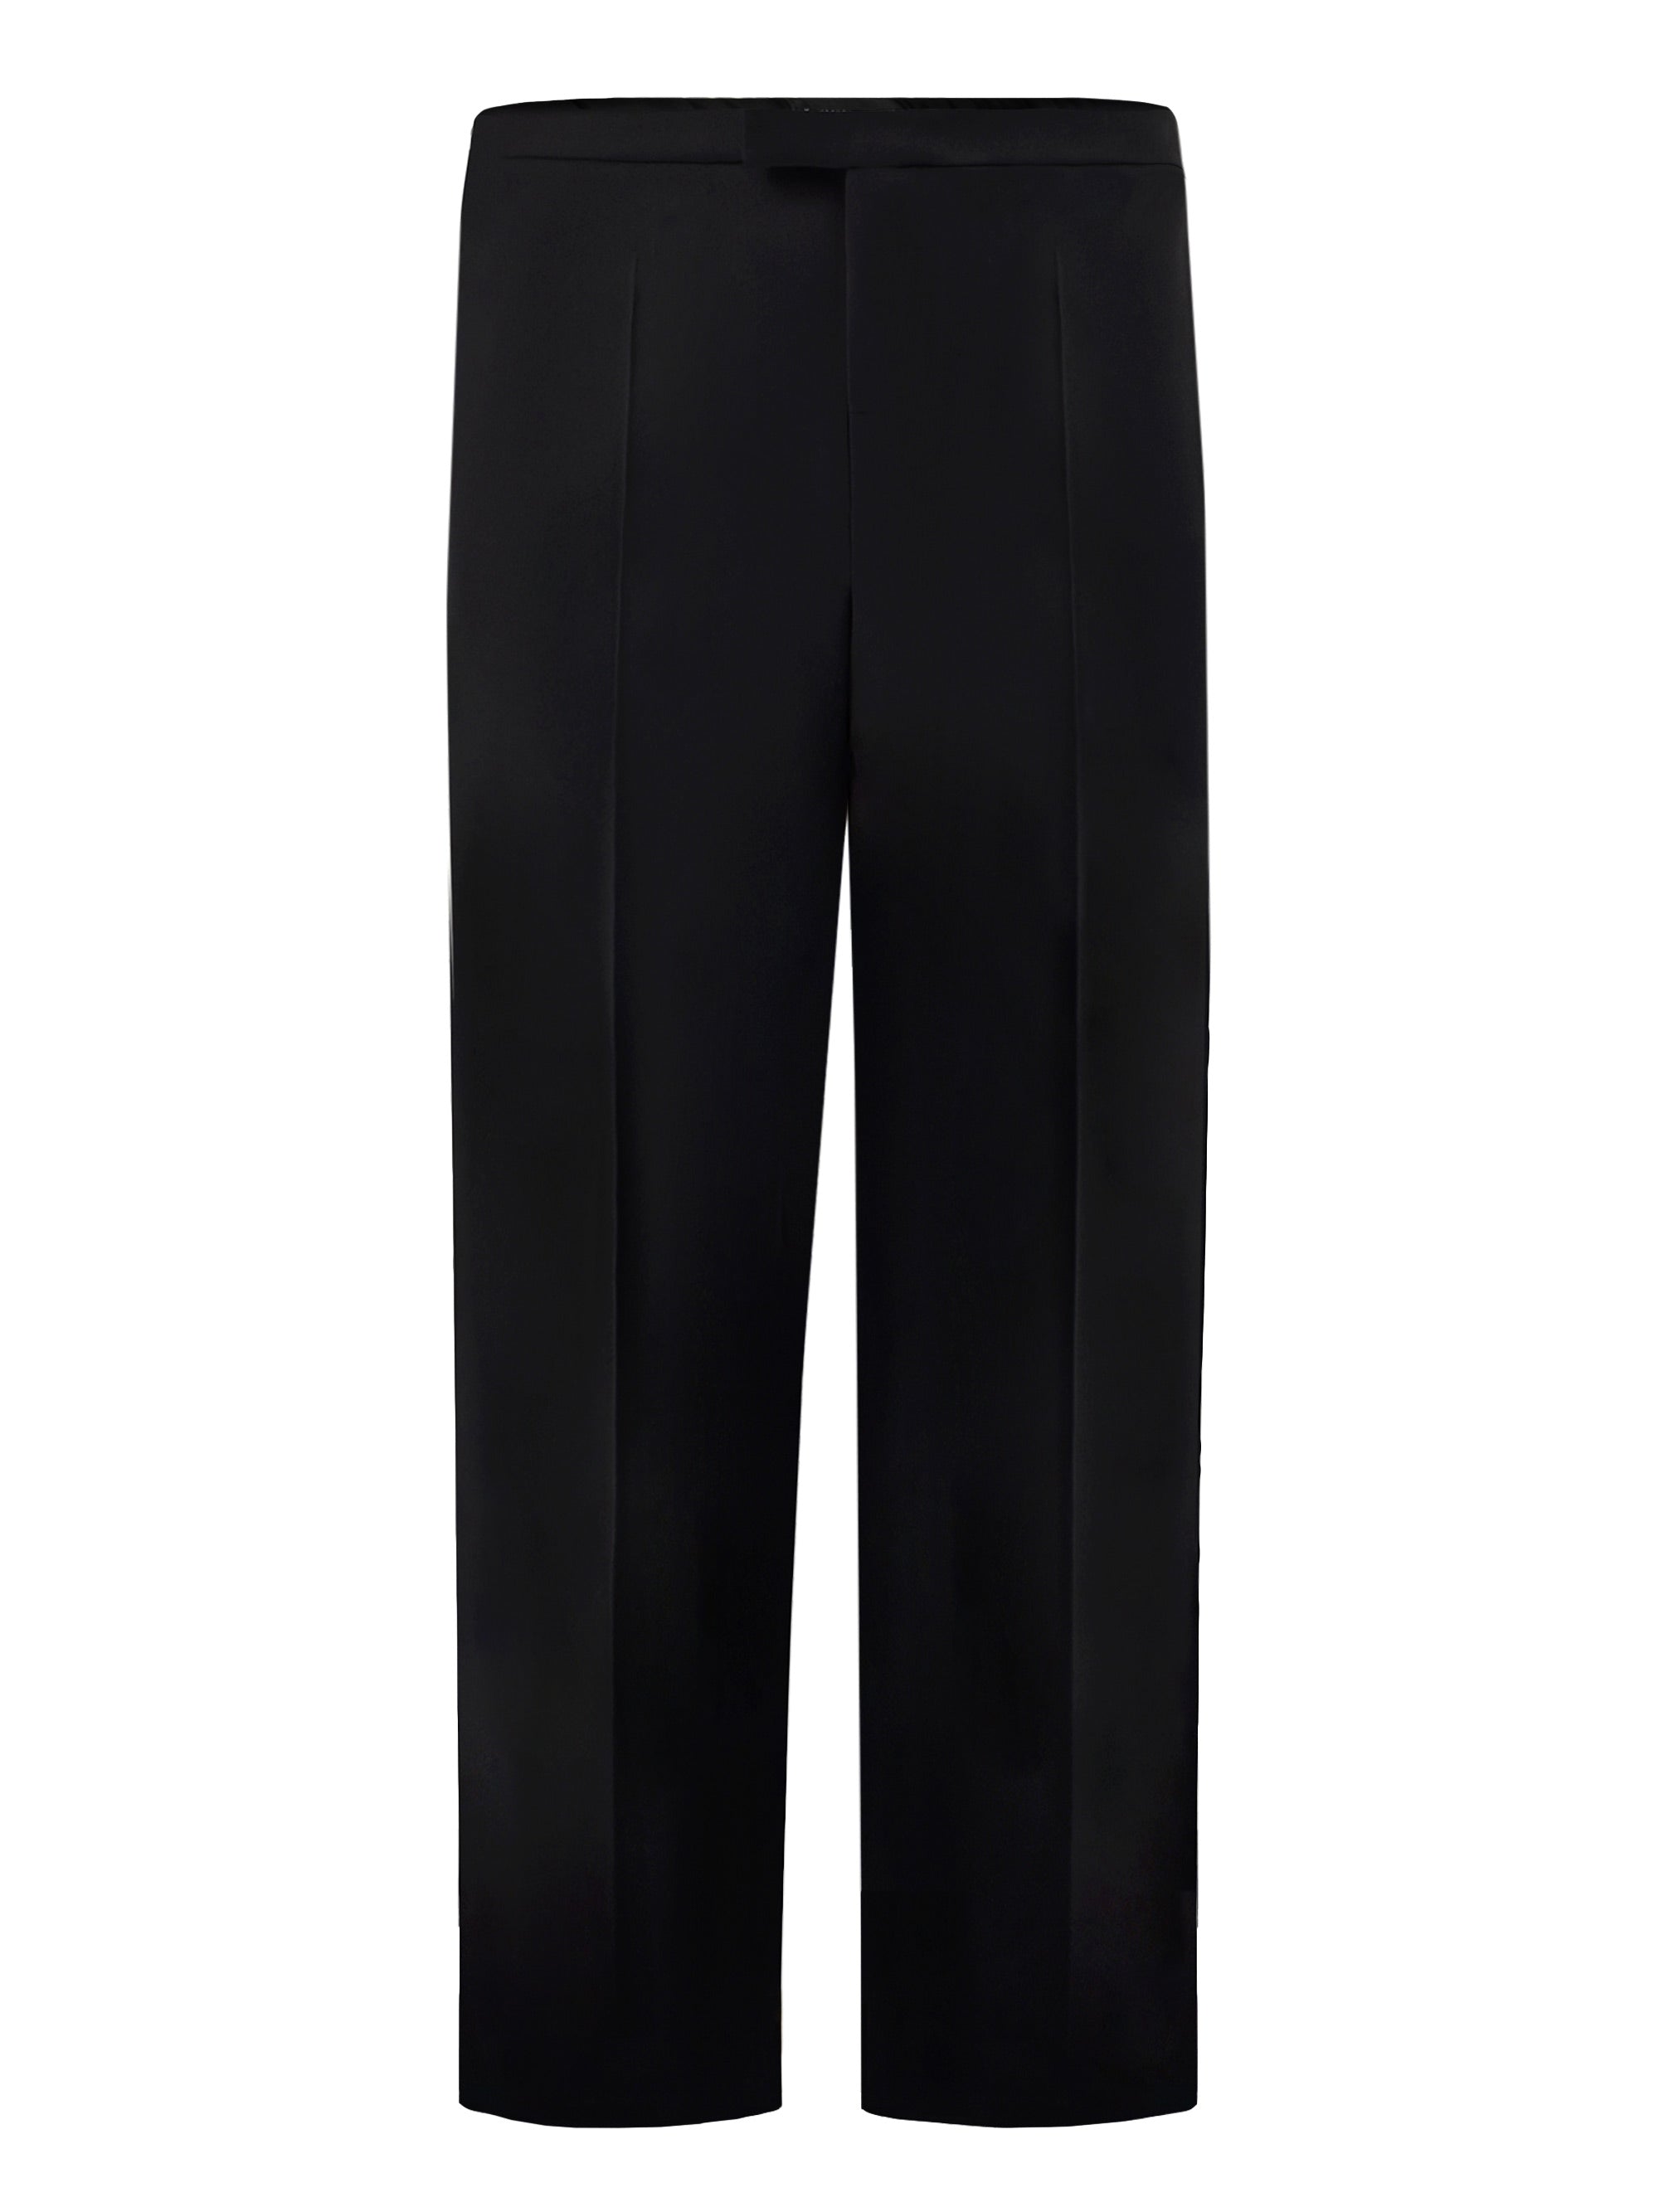 Black Straight Tailored Trouser